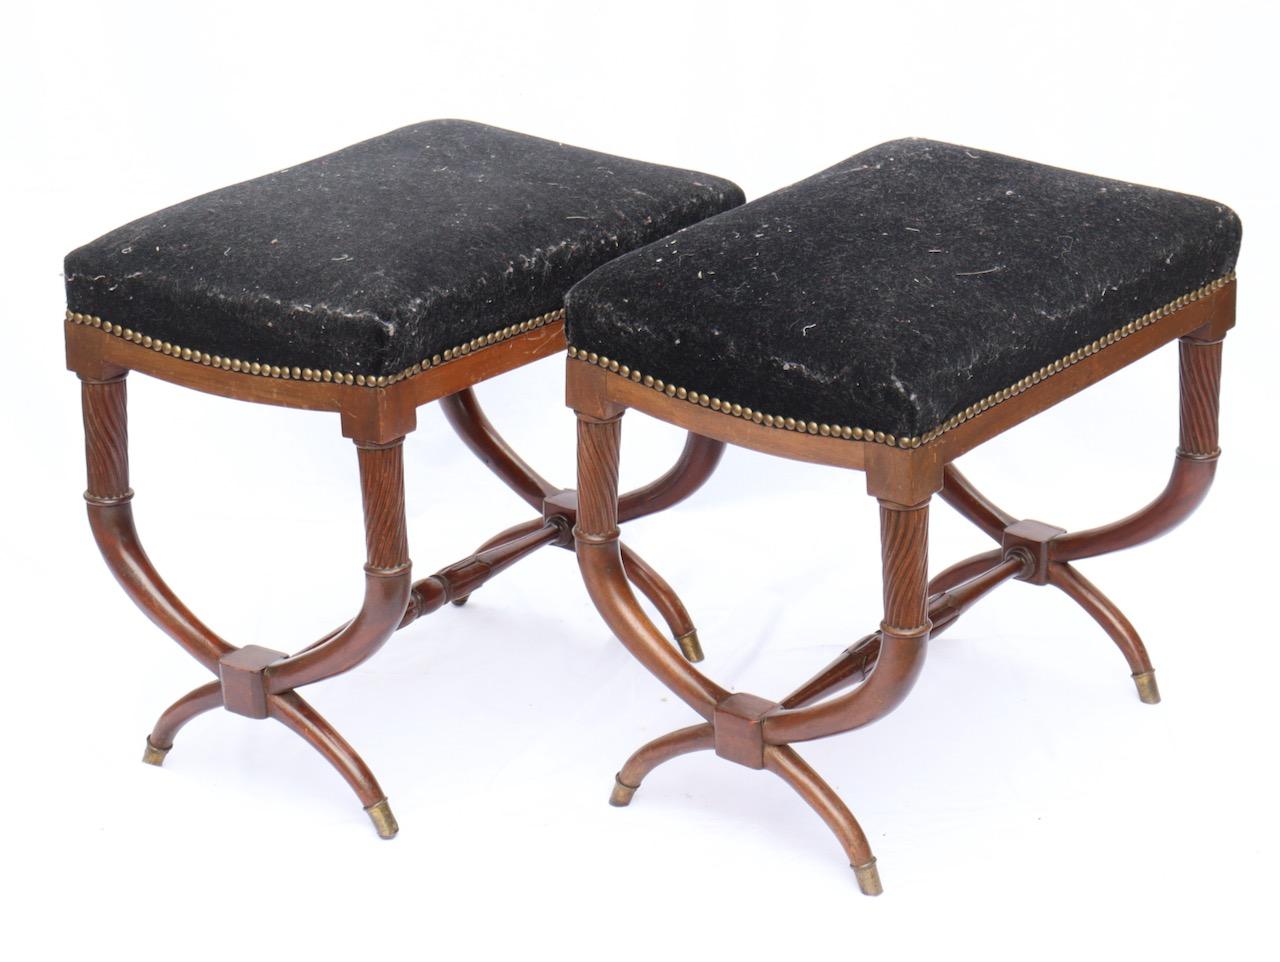 Pair of mahogany French curule stools
Époque restauration,
circa 1830

Black velvet upholstery.